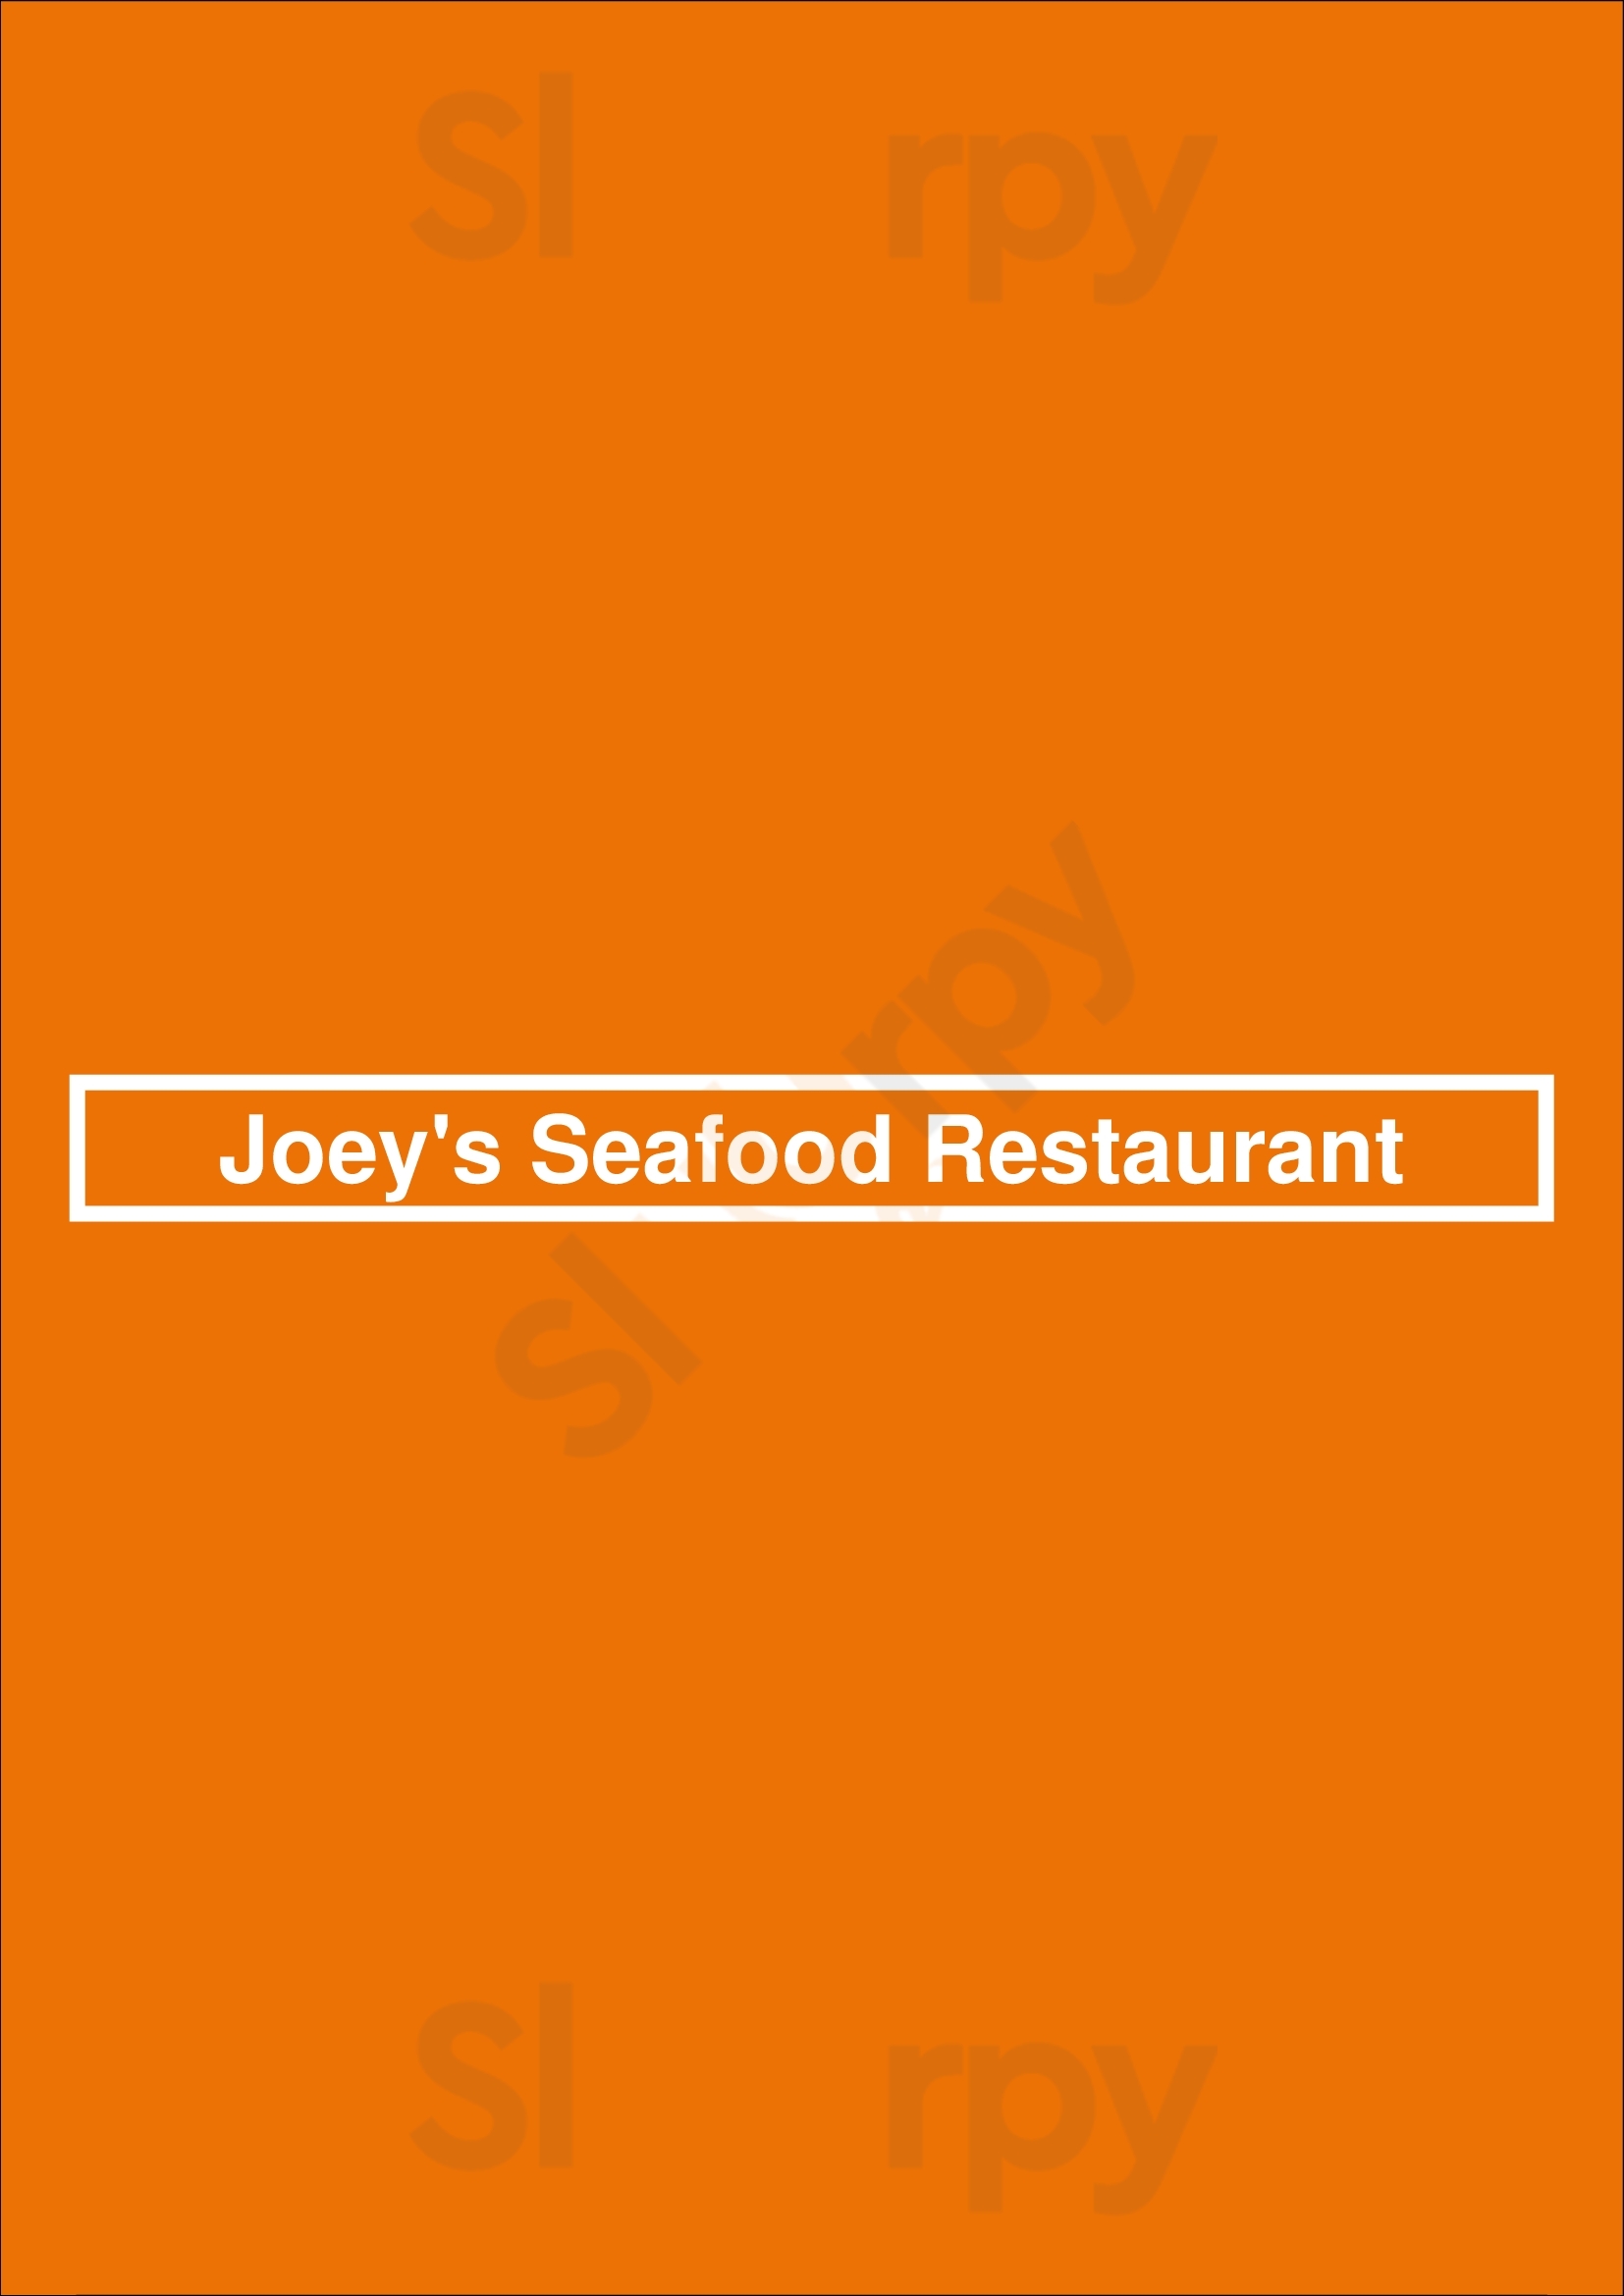 Joey's Seafood Restaurant Winnipeg Menu - 1